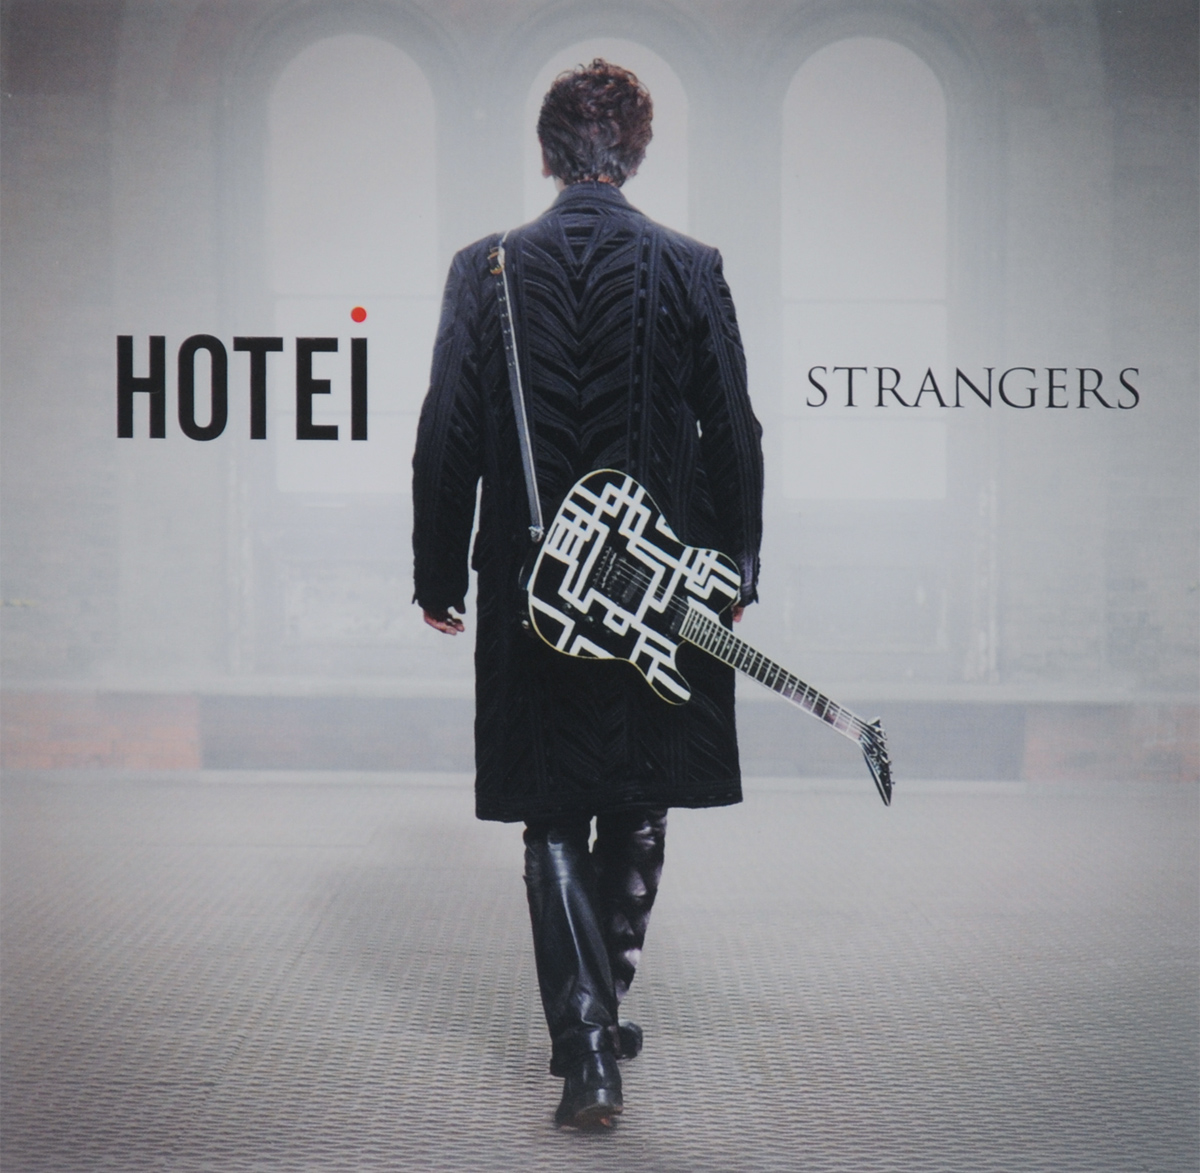 Hotei. Strangers